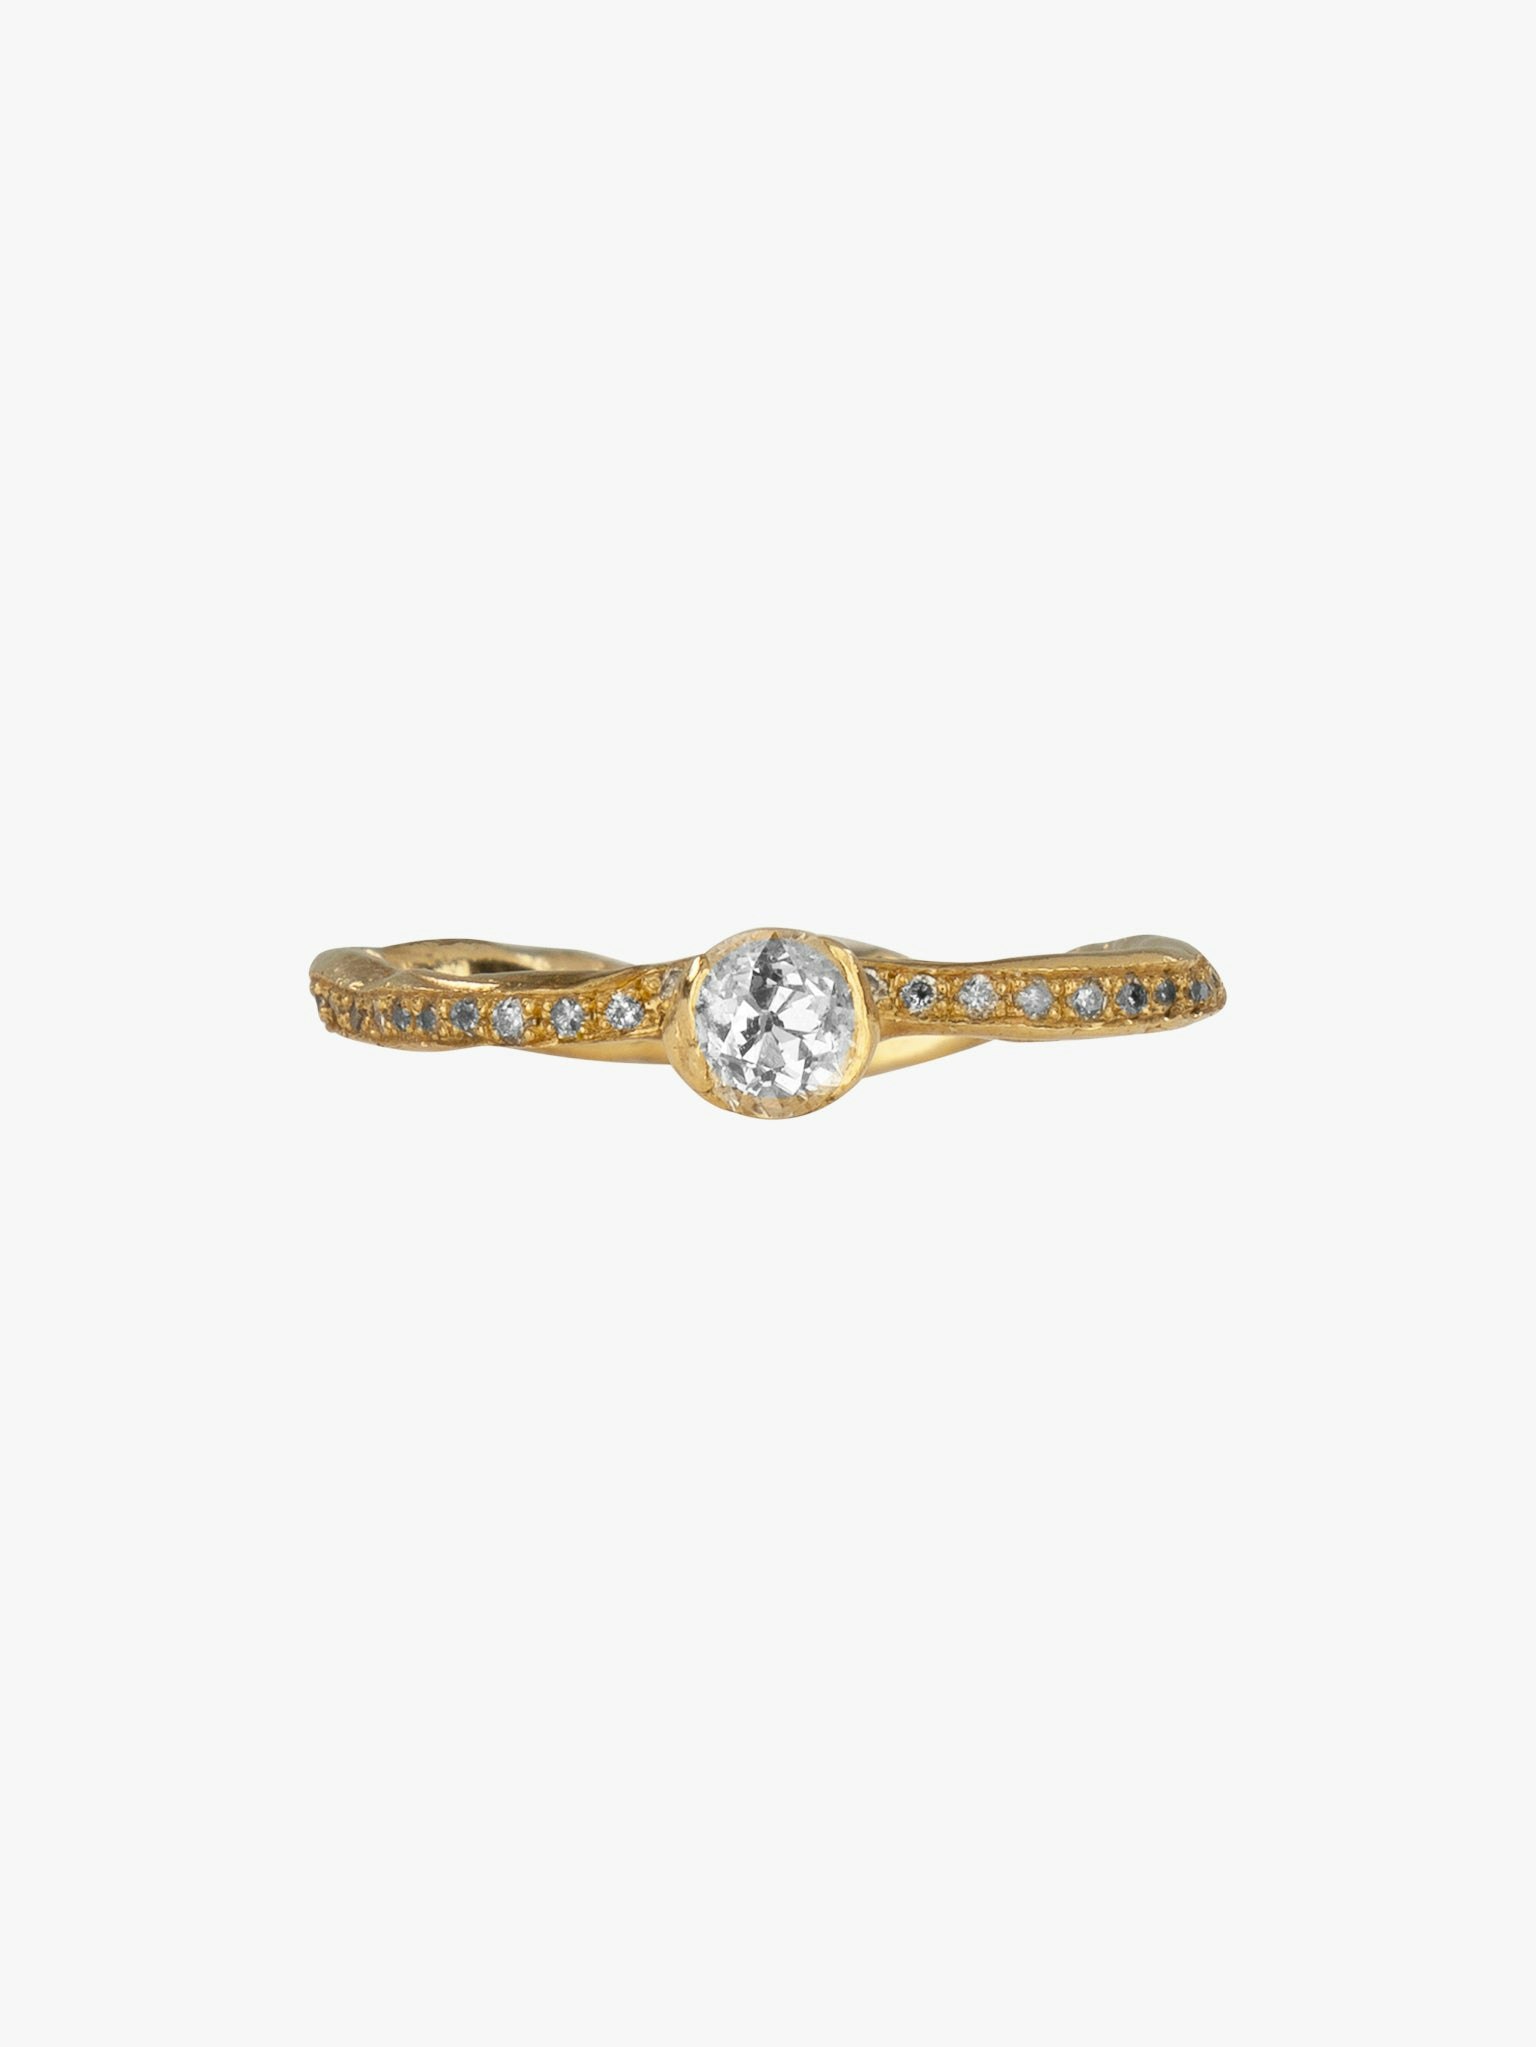 Antique diamond rowena ring photo 1